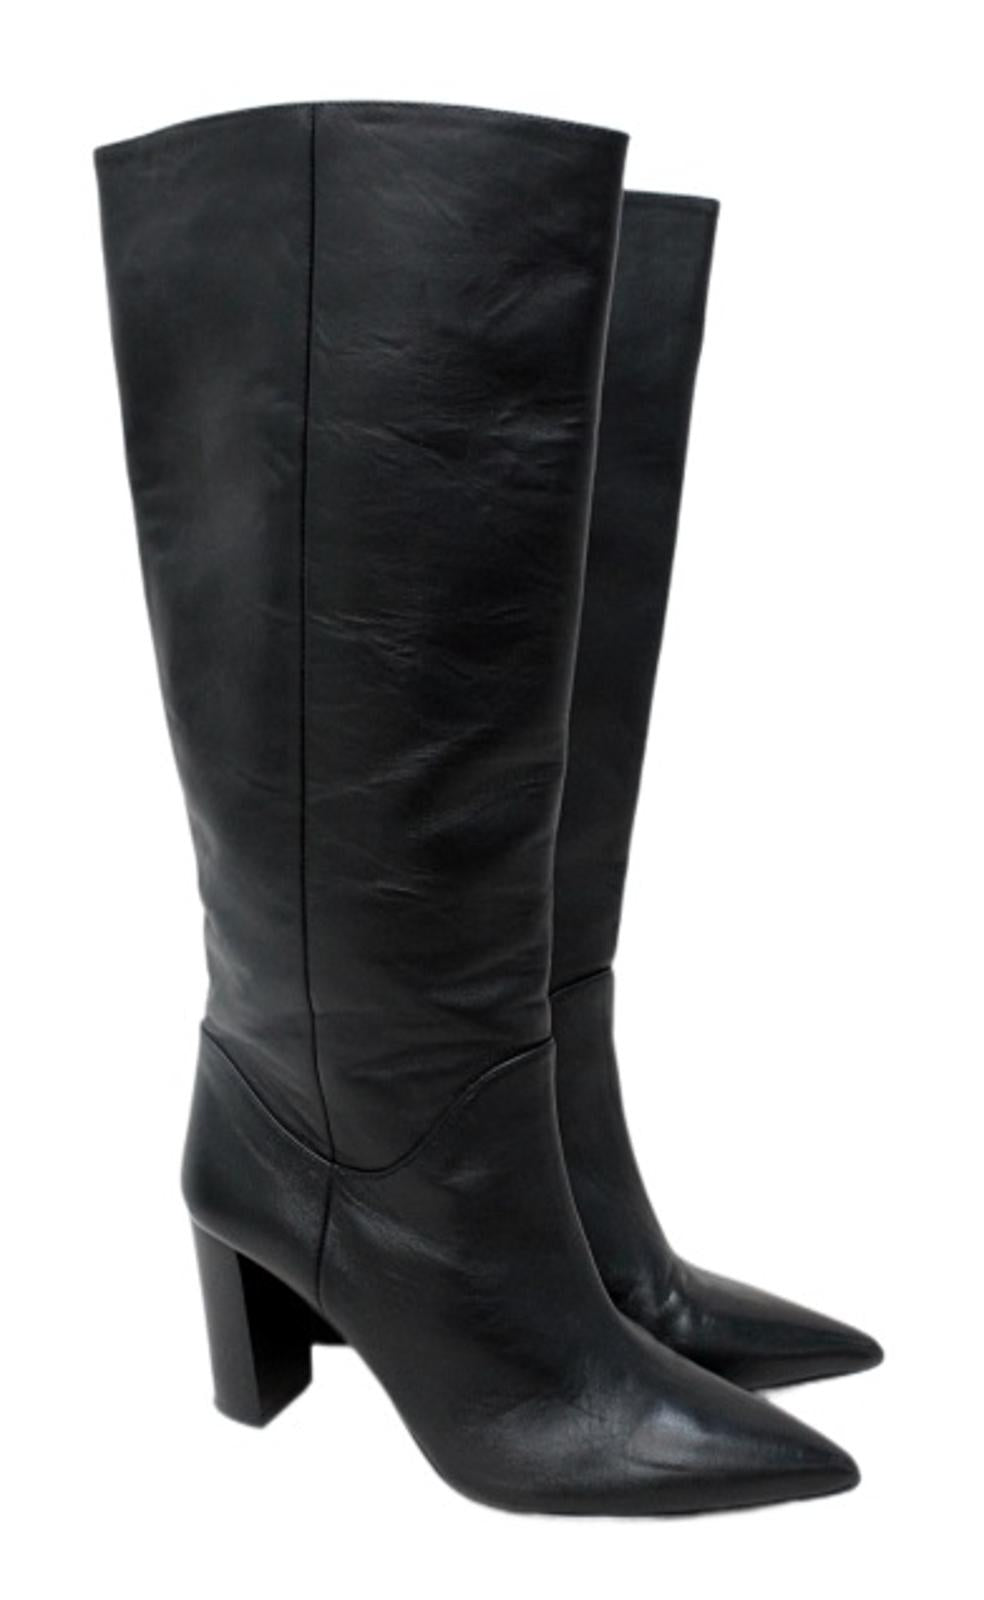 ATP ATELIER Ladies Gaeta 85 Black Leather Knee High Boots EU38 UK5 RRP625